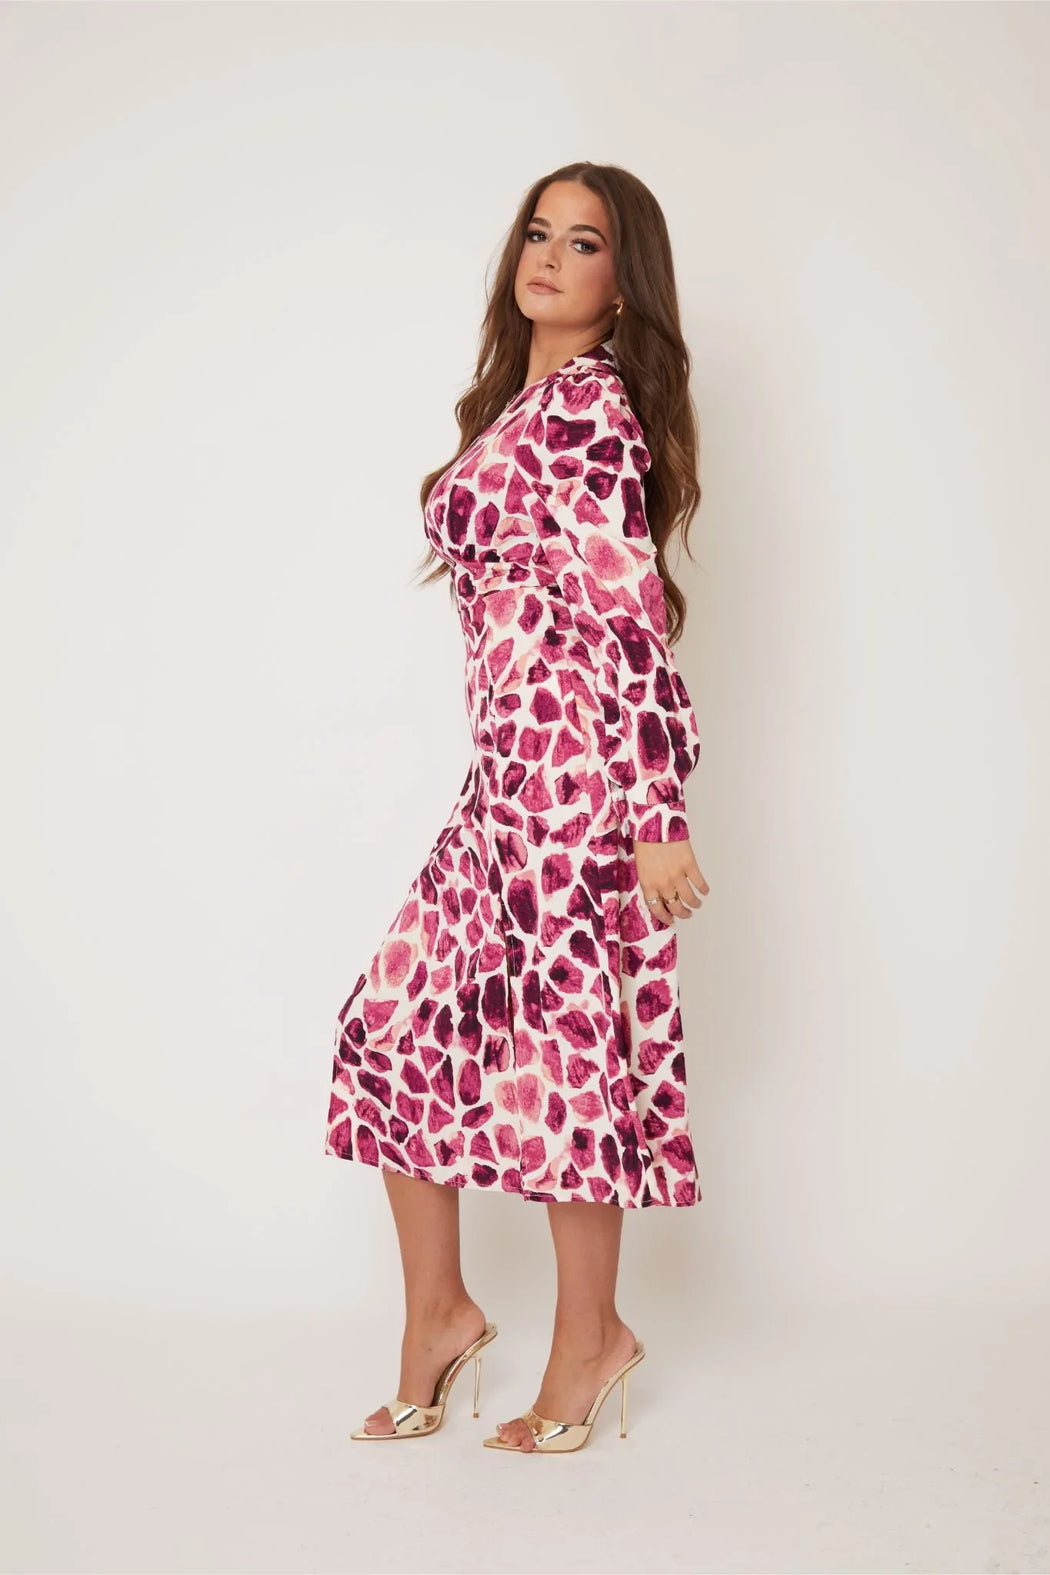 Cass Purple Giraffe Print Midi Dress